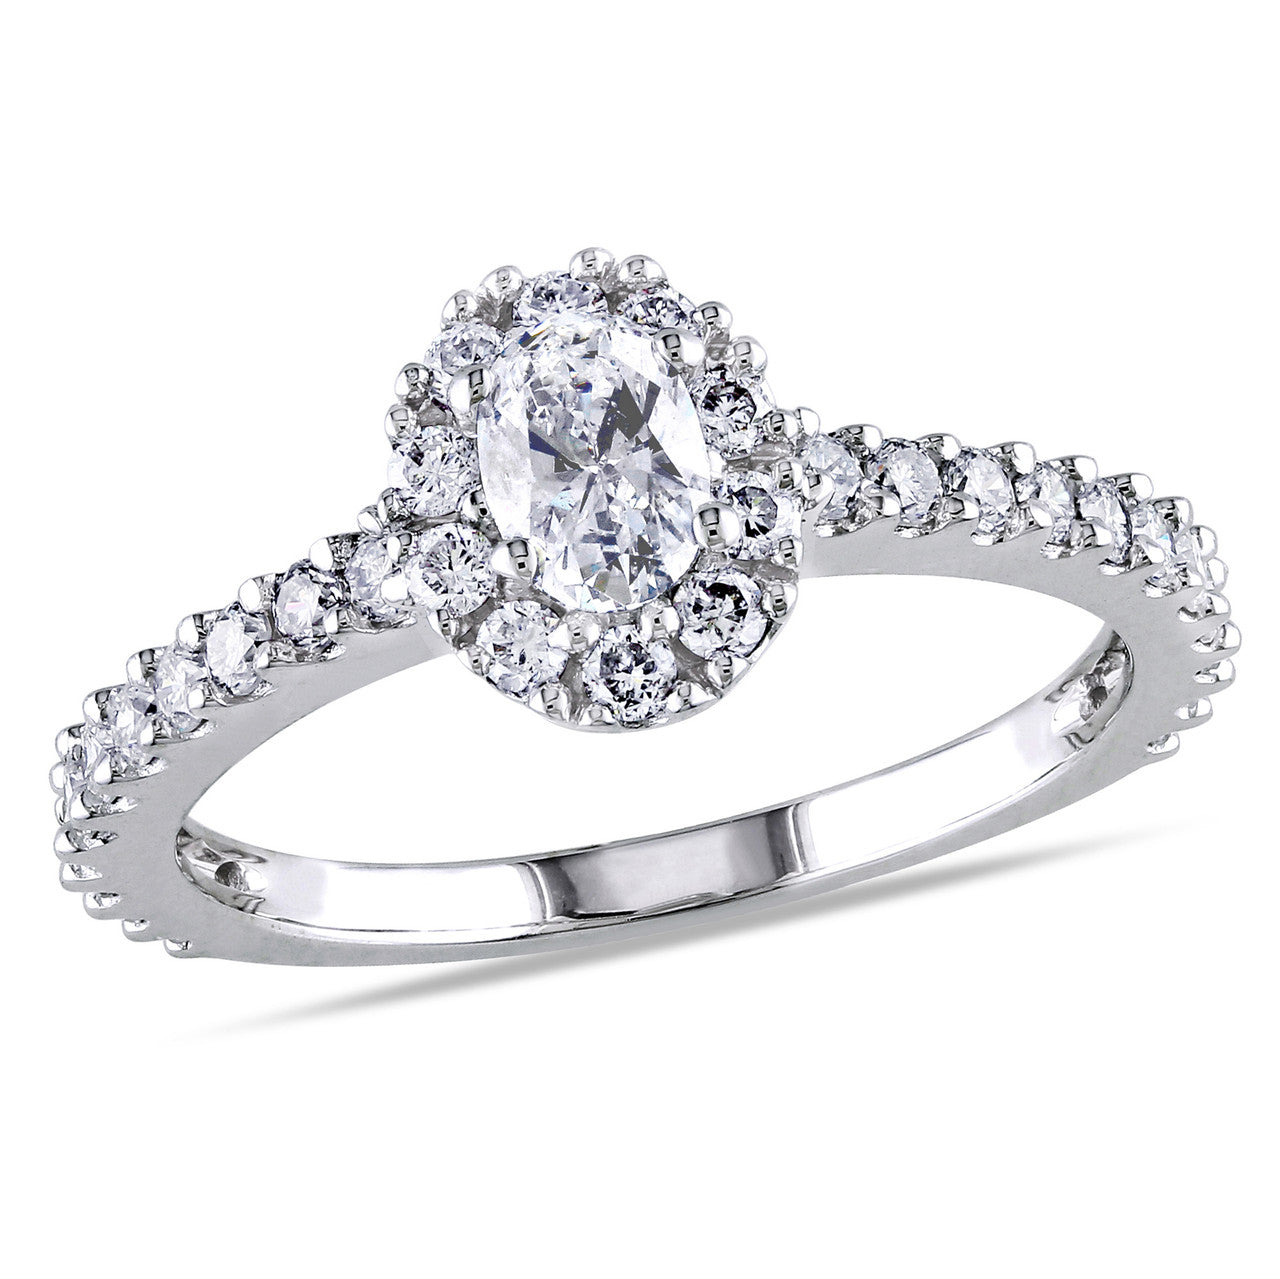 Ice Jewellery 1 CT Oval and Round Diamonds TW Halo Ring in 14k White Gold - 75000004127 | Ice Jewellery Australia